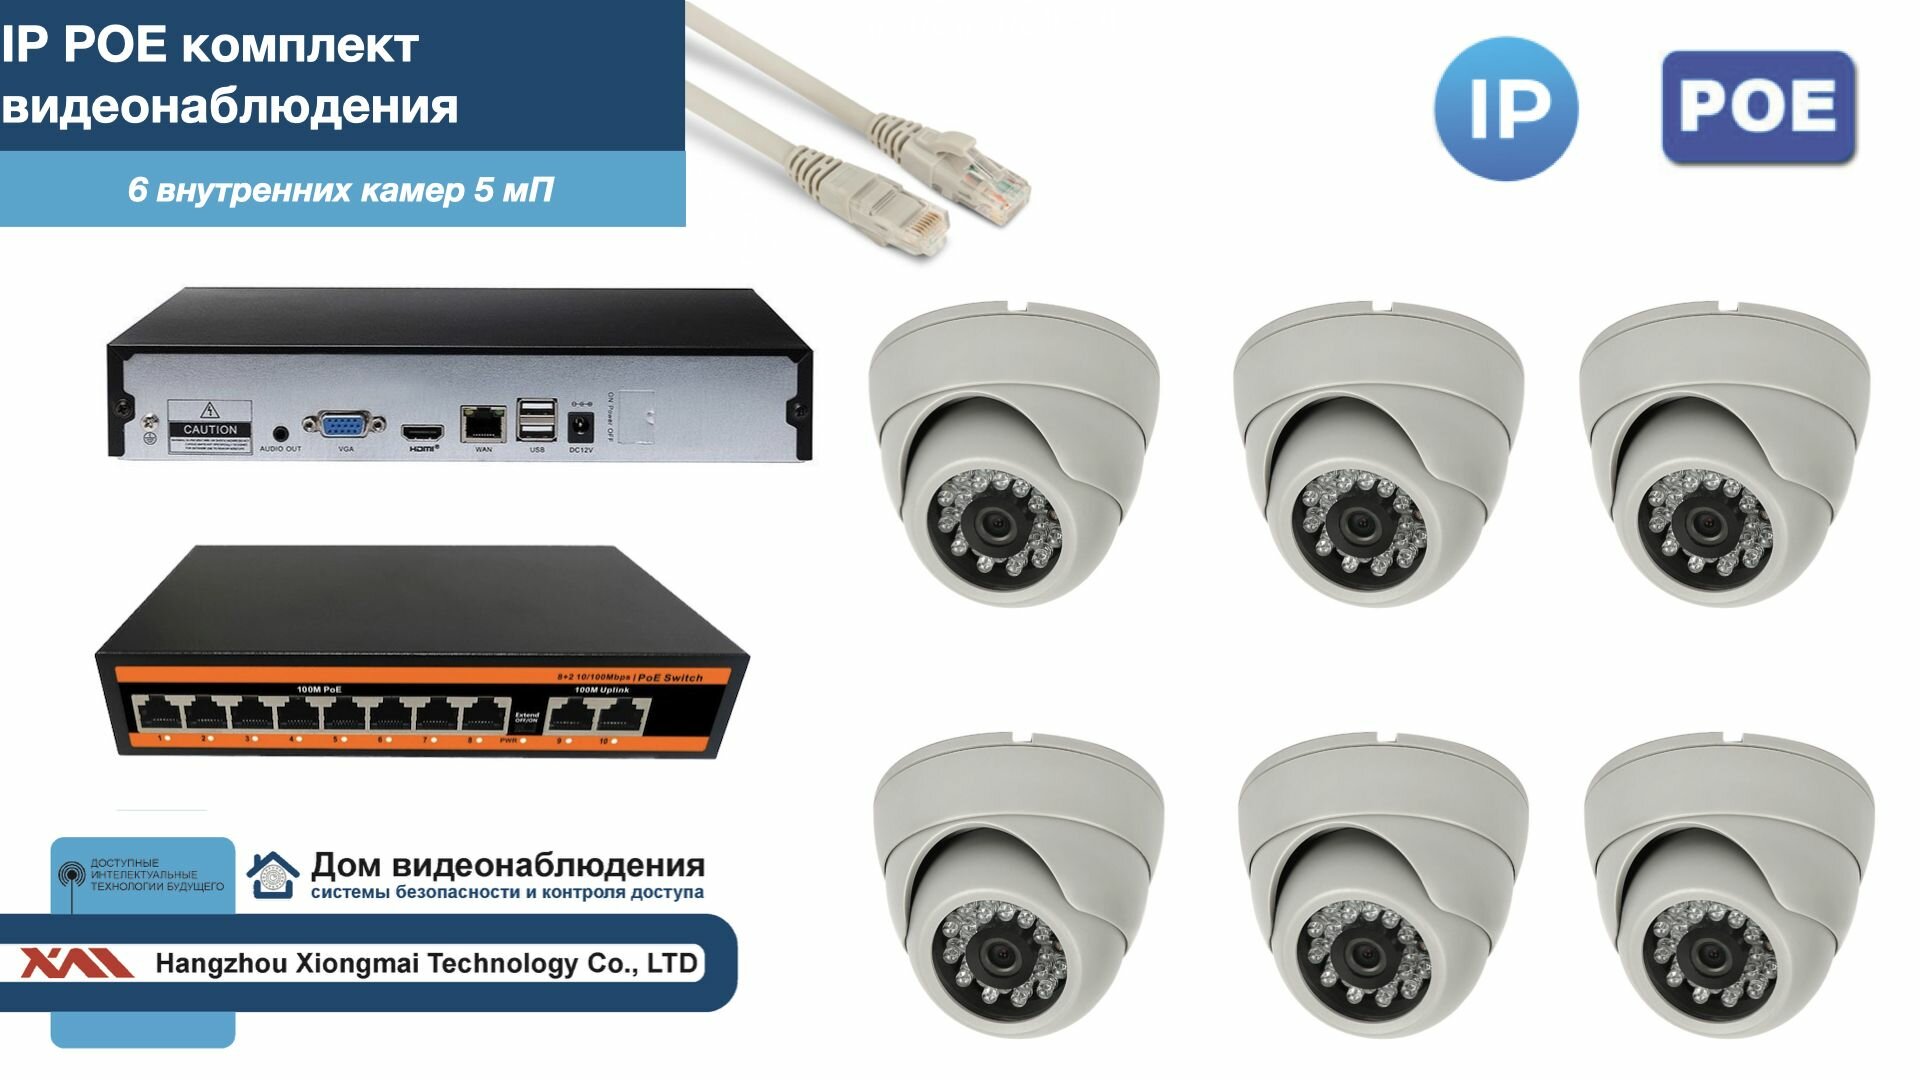 Полный IP POE комплект видеонаблюдения на 6 камер (KIT6IPPOE300W5MP)